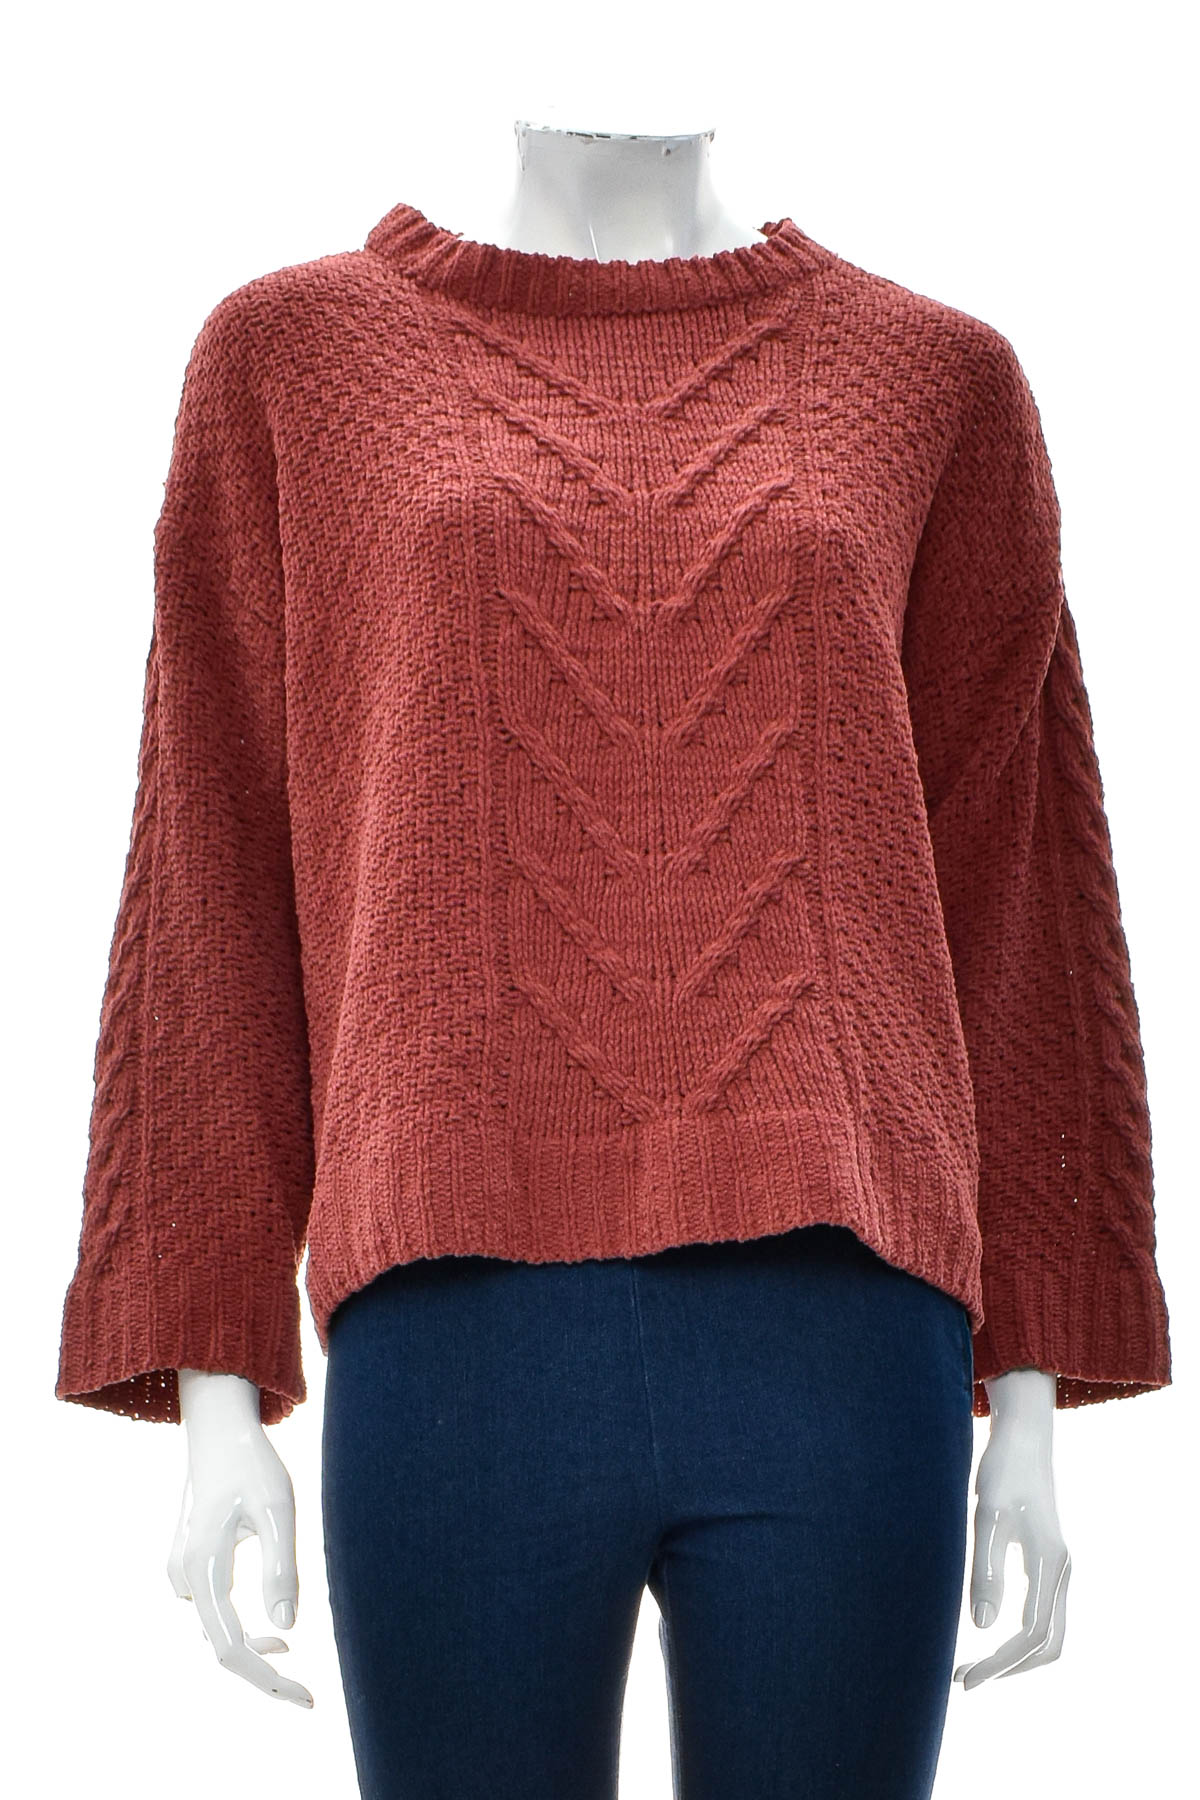 Women's sweater - Anko - 0